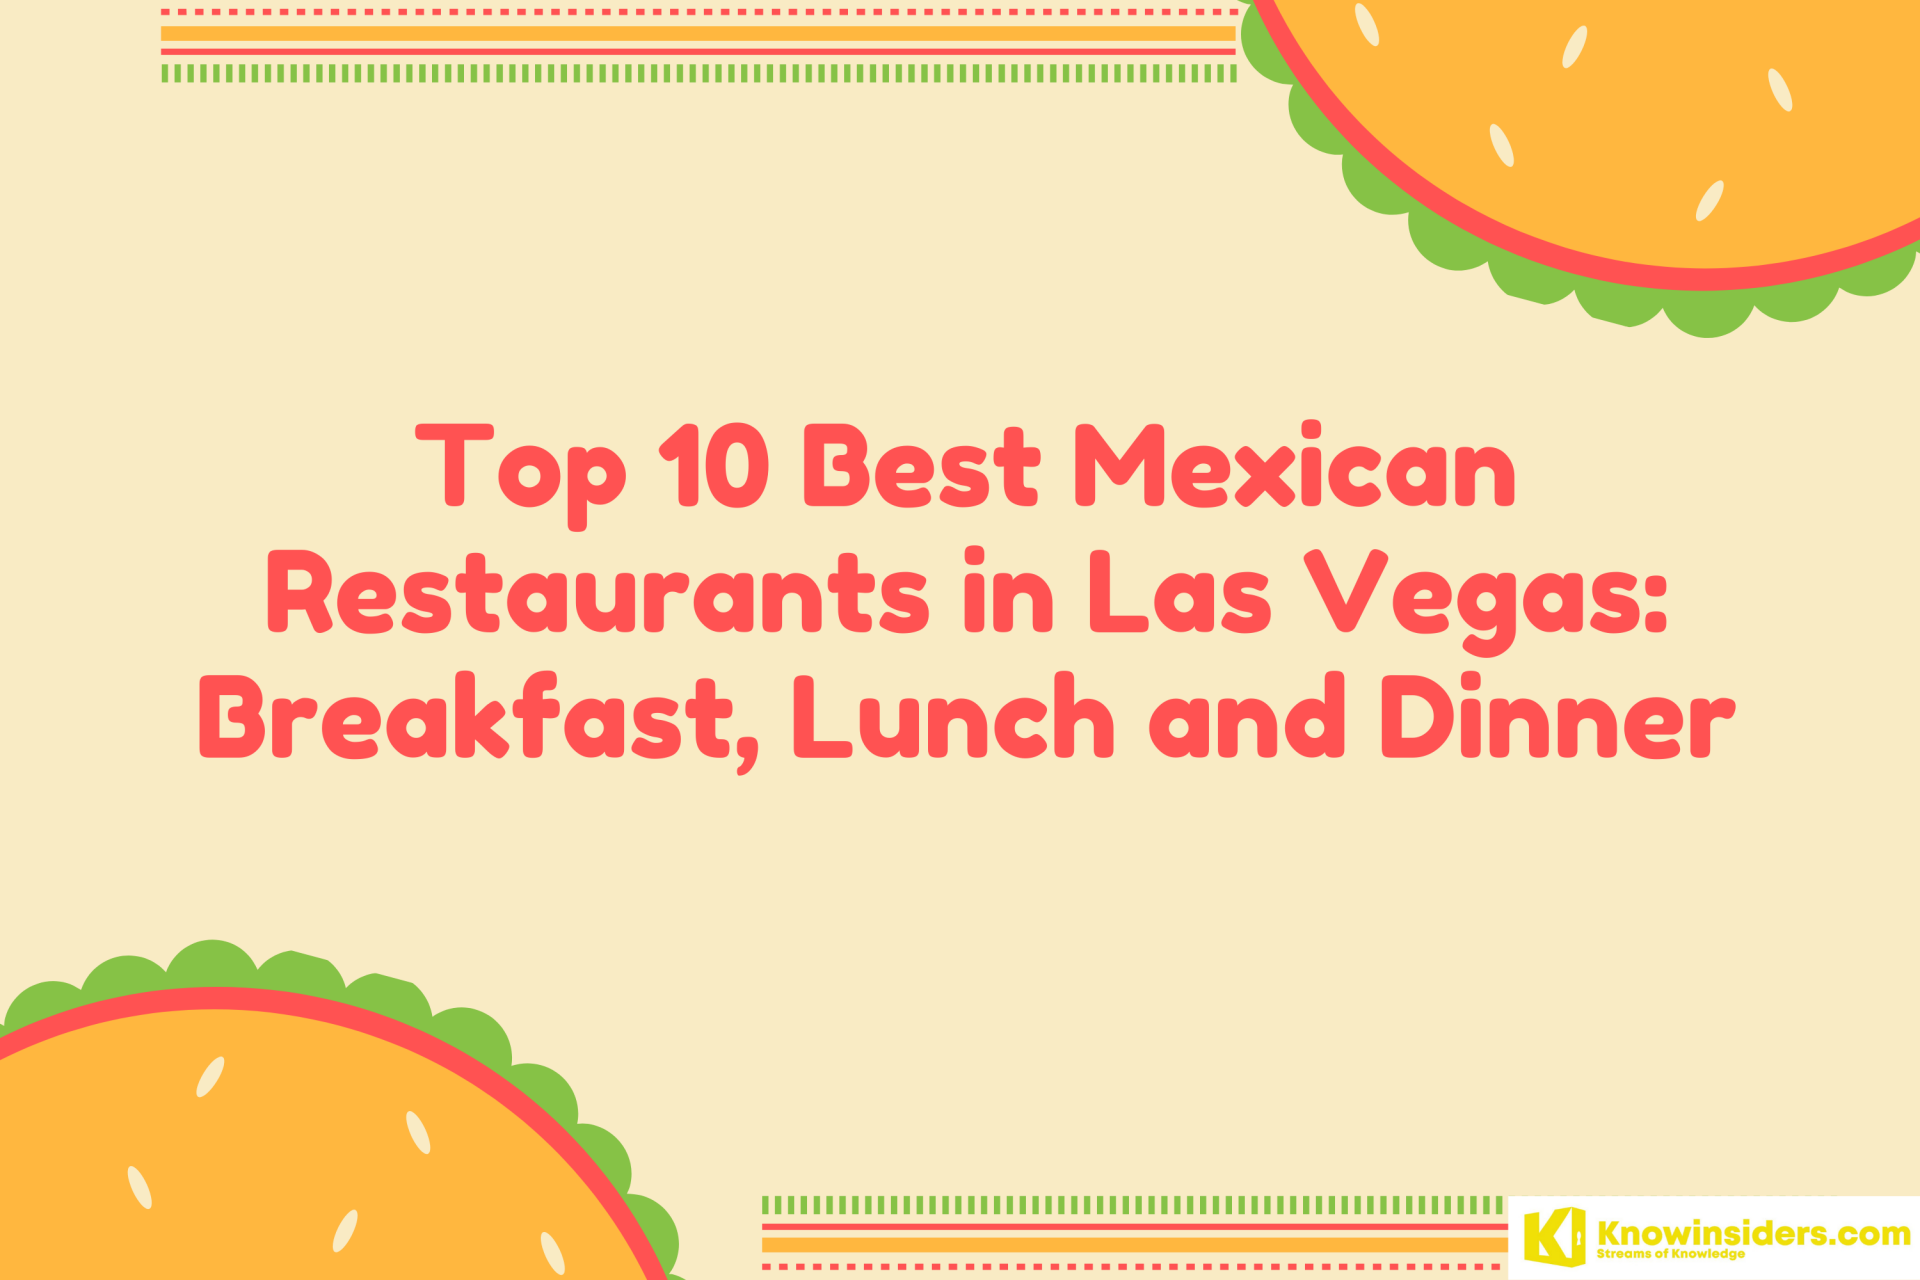 Top 10 Best Mexican Restaurants in Las Vegas: Breakfast, Lunch and Dinner